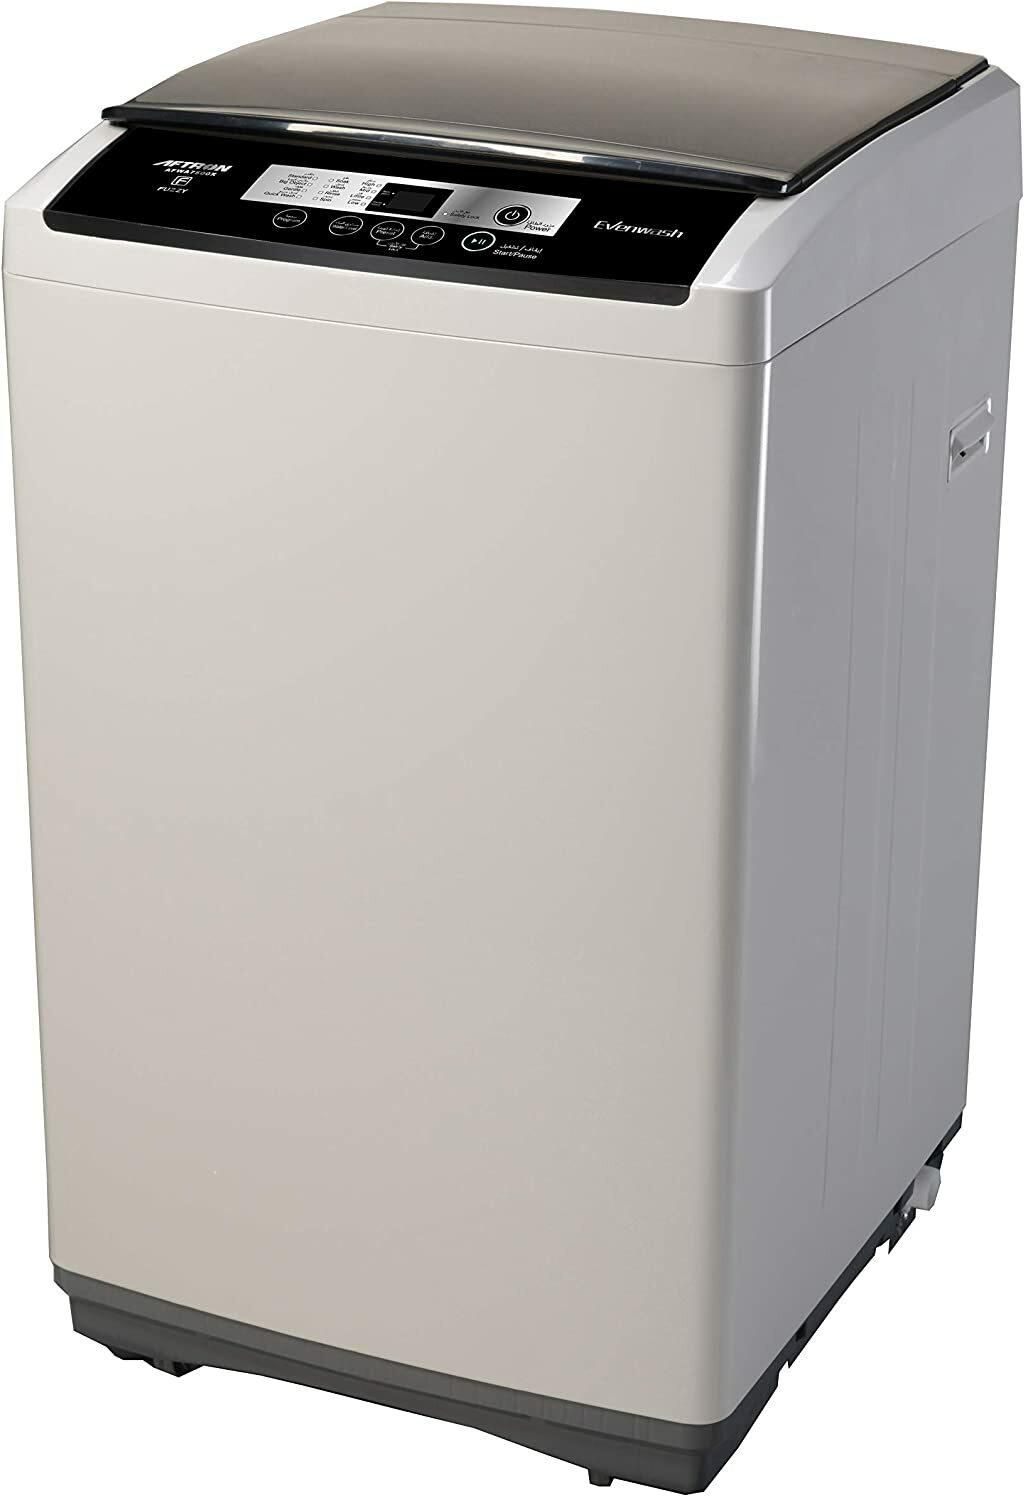 Aftron 7 KG Top Loading Washing Machine AFWA7500X